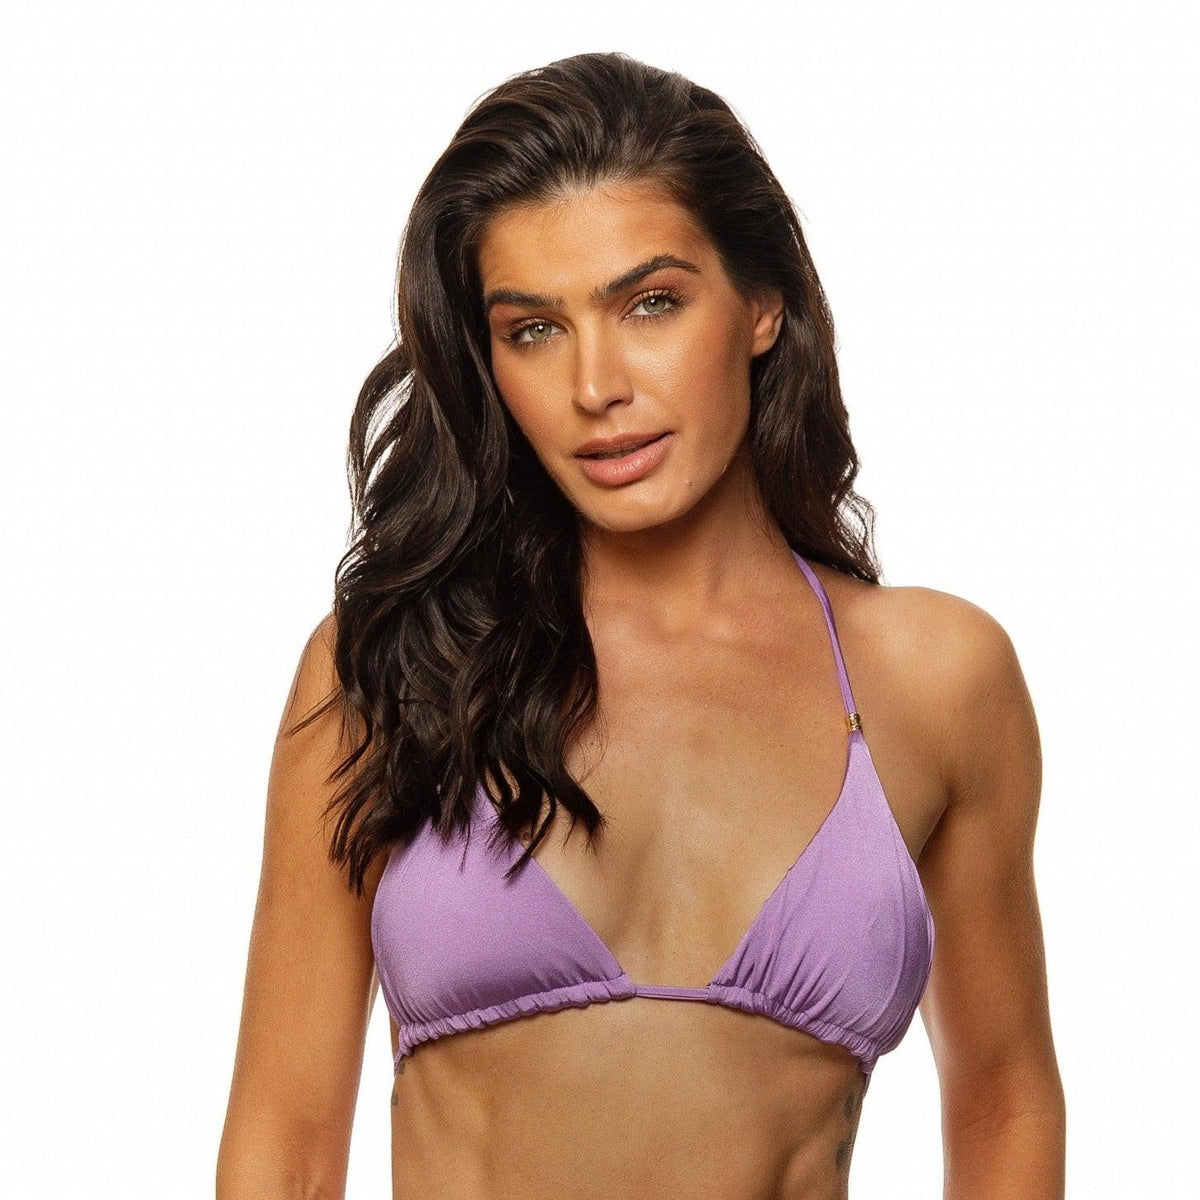 Guria Purple Shimmer Reversible Triangle Top - Lion's Lair Boutique - ALT, Bikini, Fashion, FEB 2023, Guria, L, M, Pattern, Reversible, S, Solid, Swimwear, Top, Triangle, TRV, XL, XS - Guria